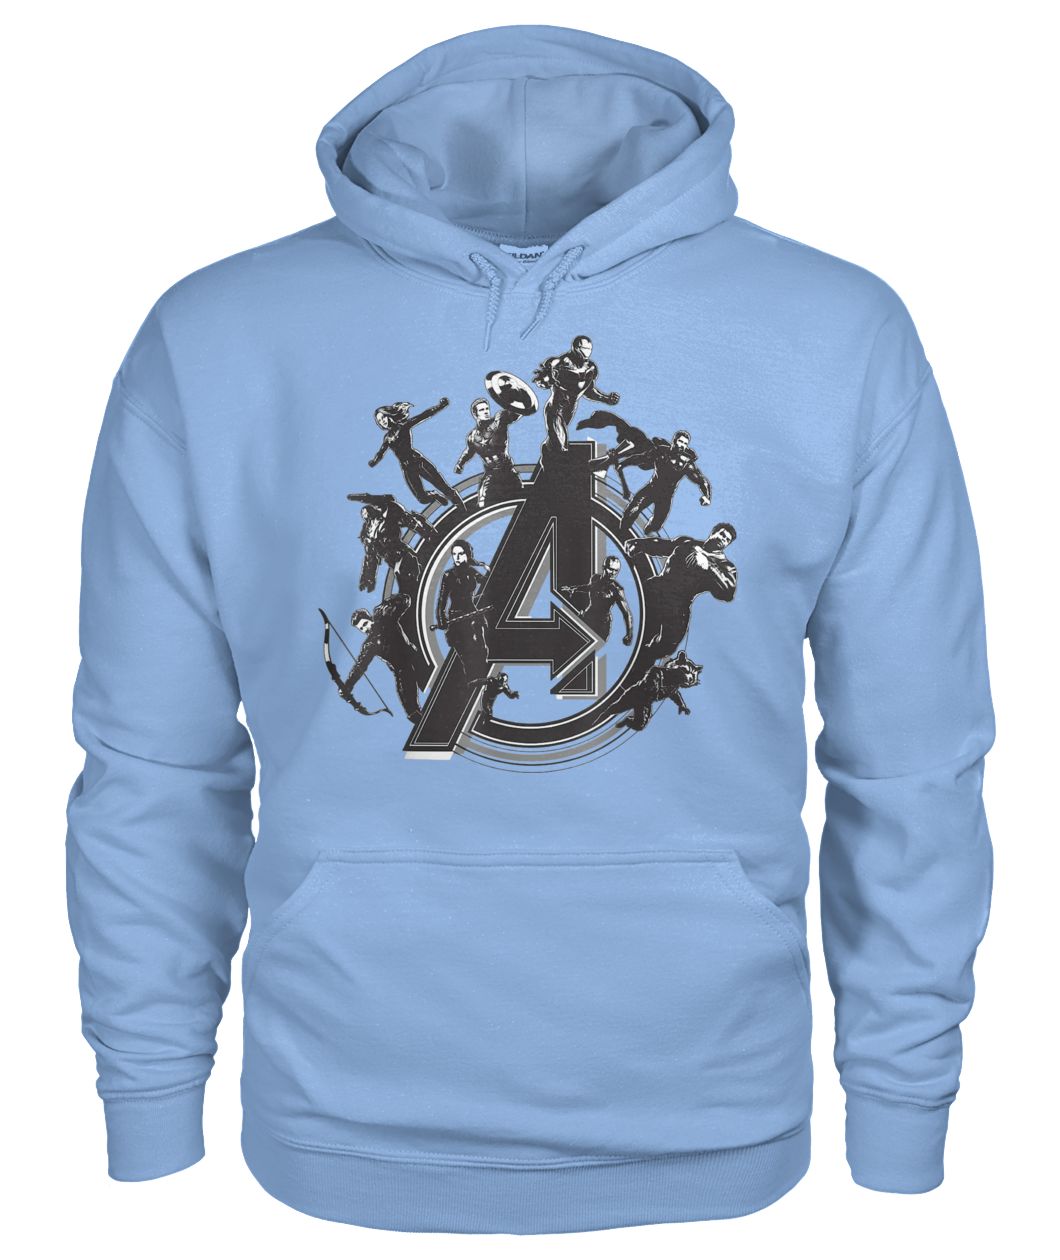 Marvel avengers endgame flying heroes logo graphic gildan hoodie